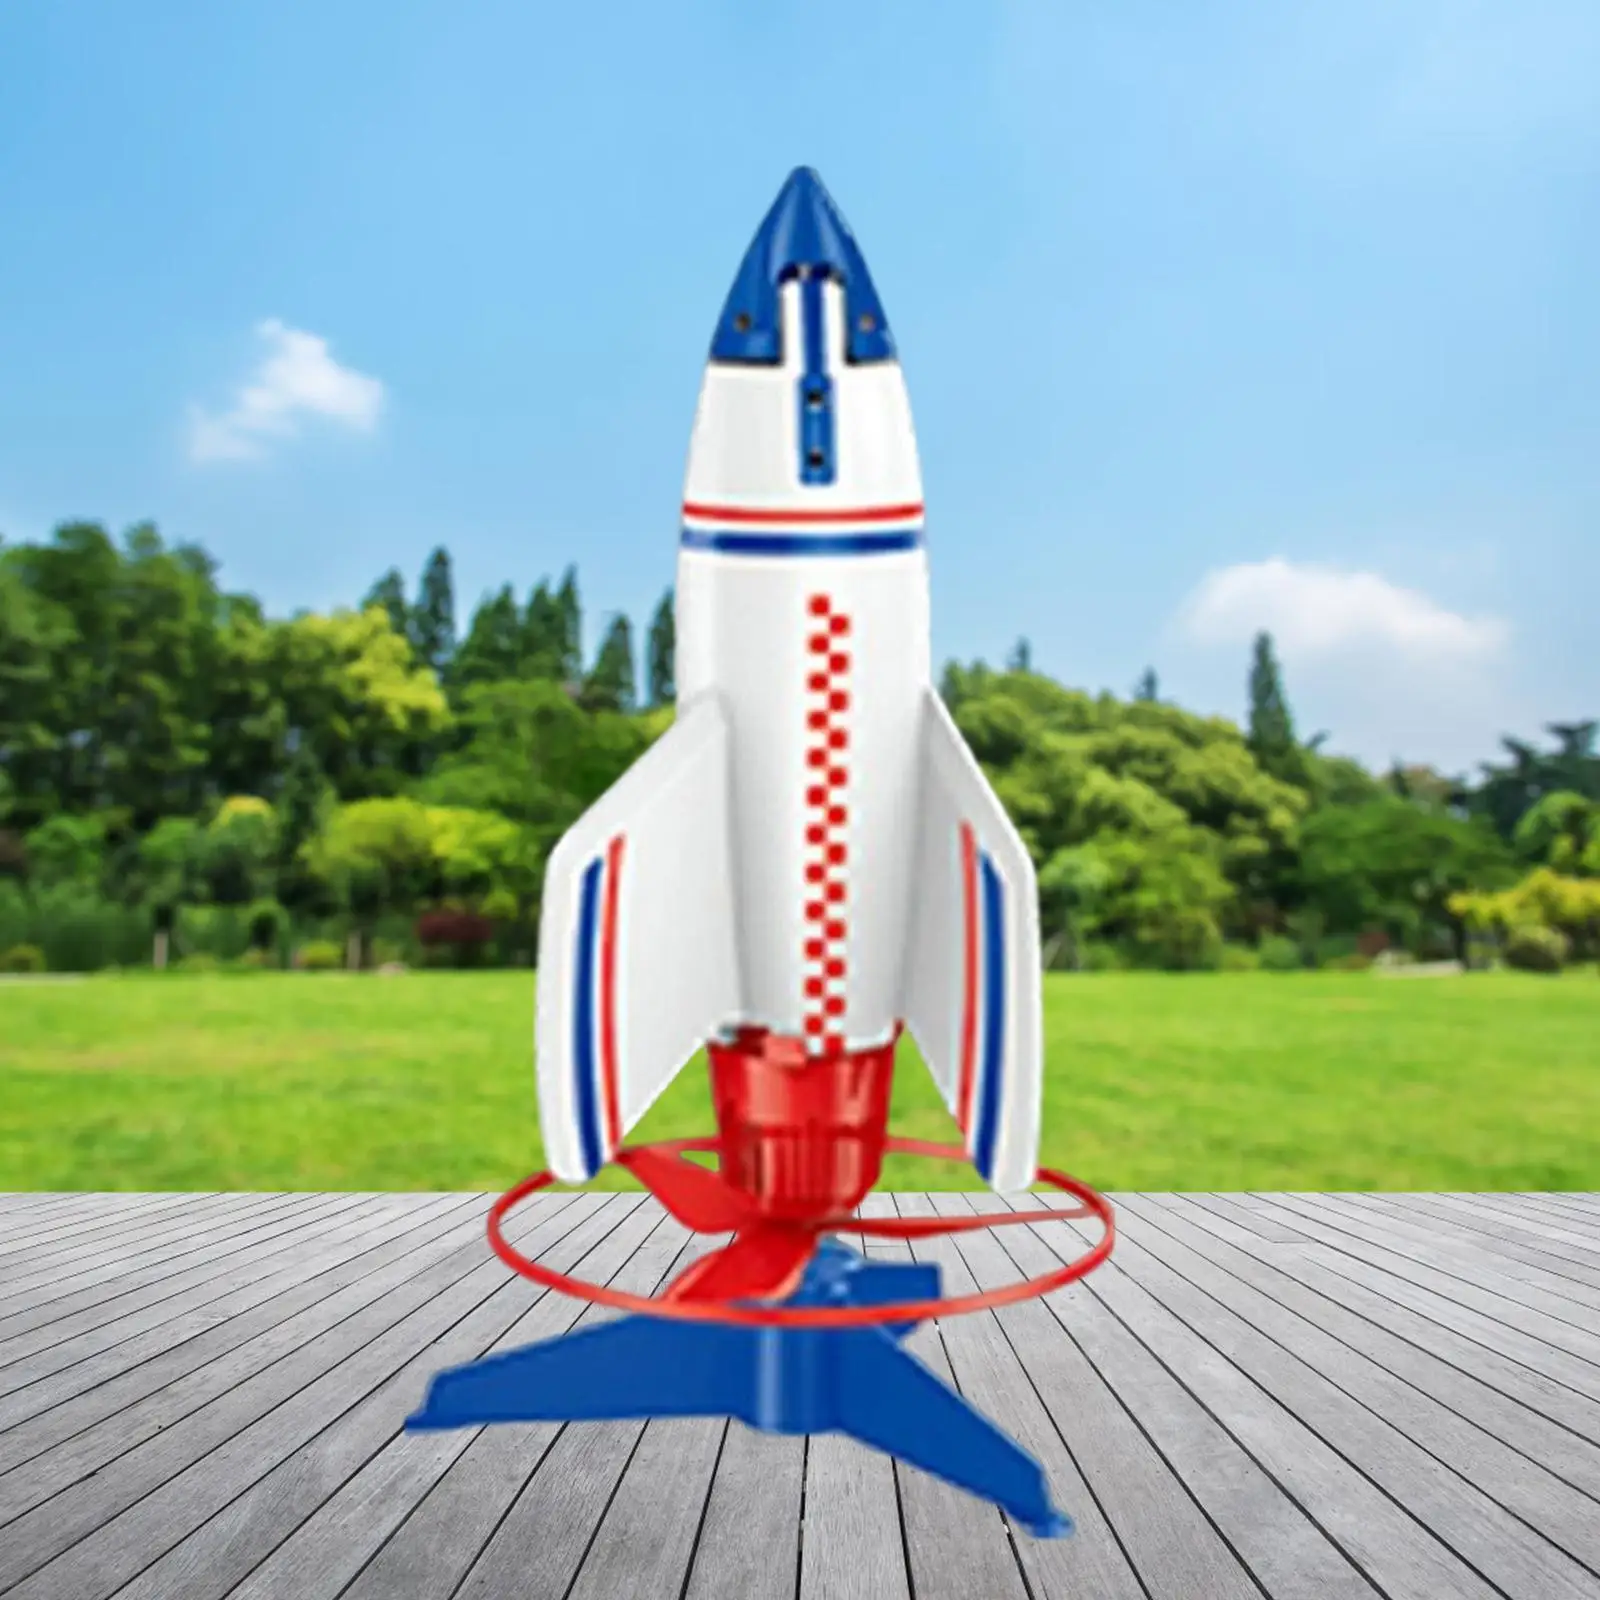 Rocket Launcher for kids Higher Foam Rockets for boys Toddlers